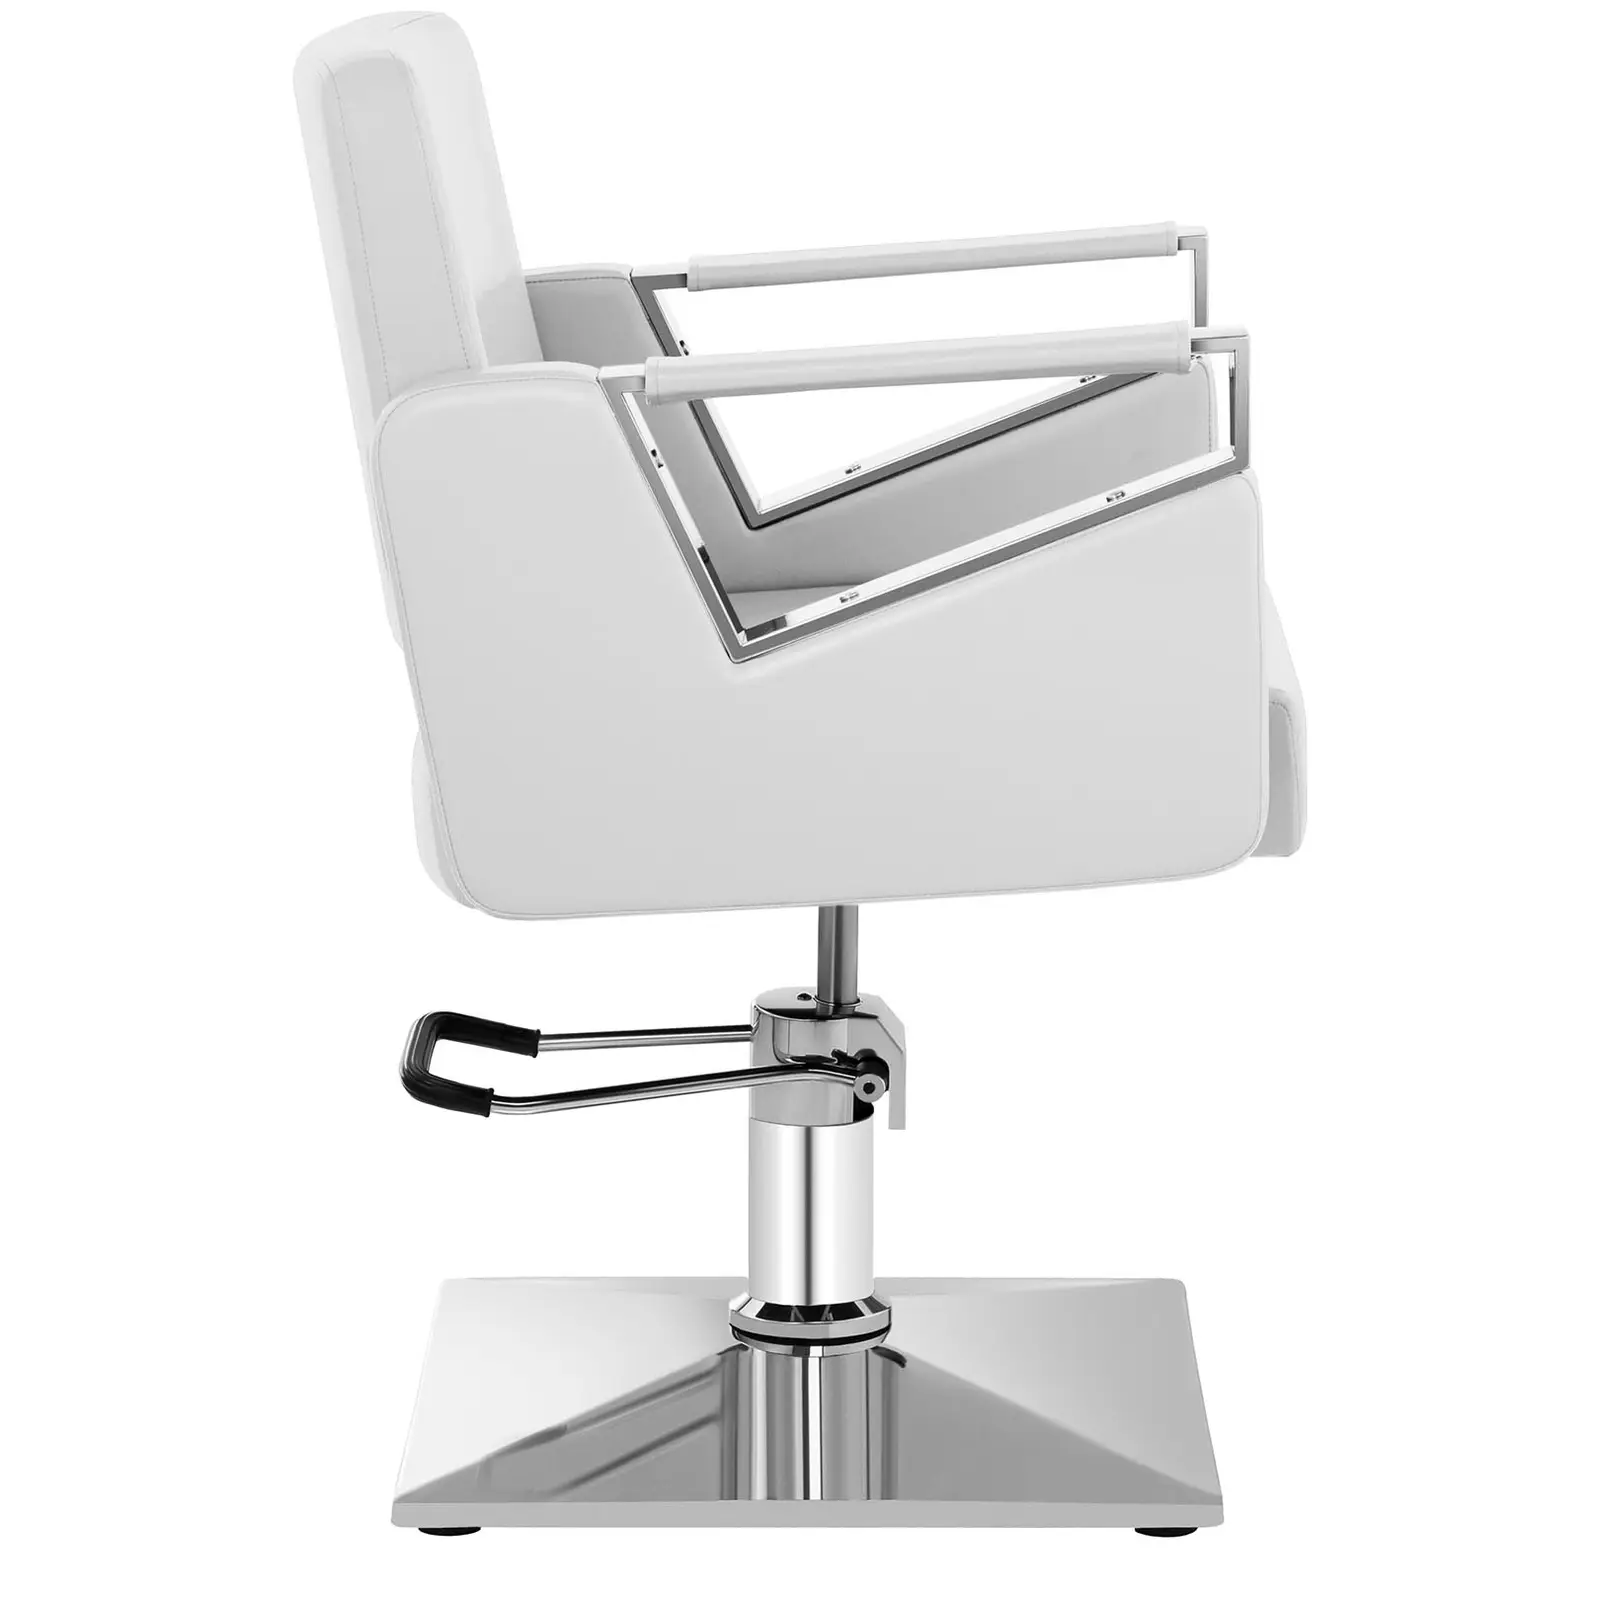 Salon Chair - 445-550 mm - Matte white